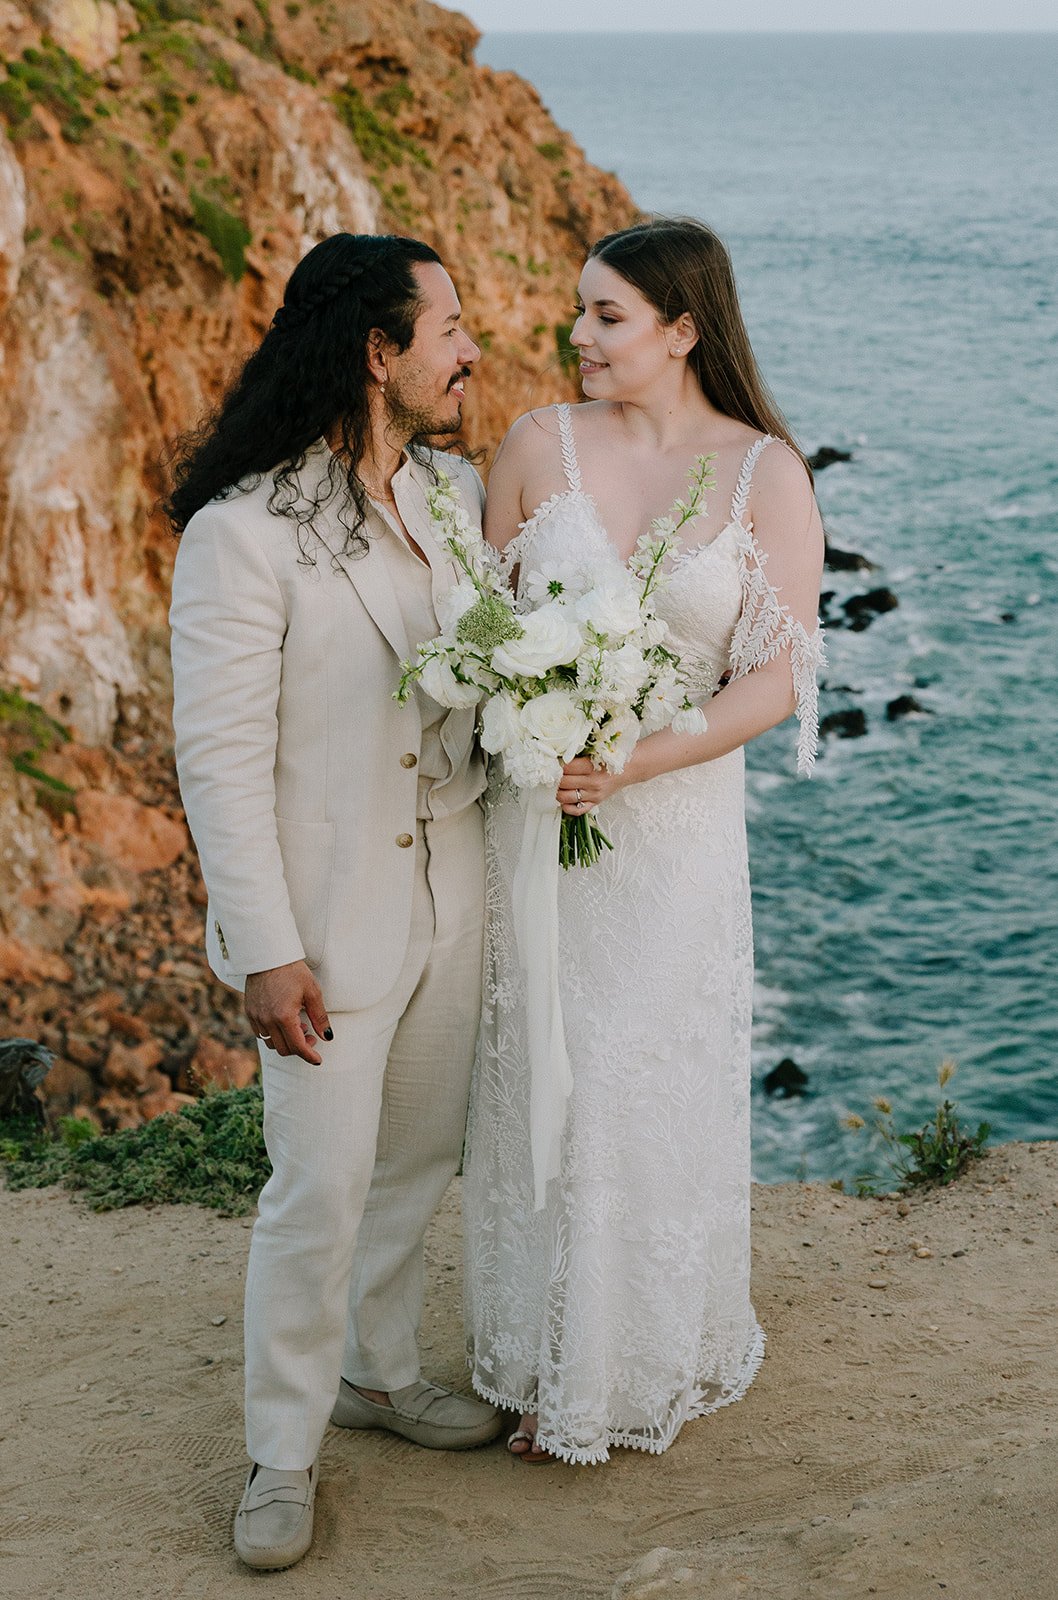 Intimate Malibu Elopement on The Beach - Natalie Nicole Photo - Destination Wedding Photographer (119).jpg